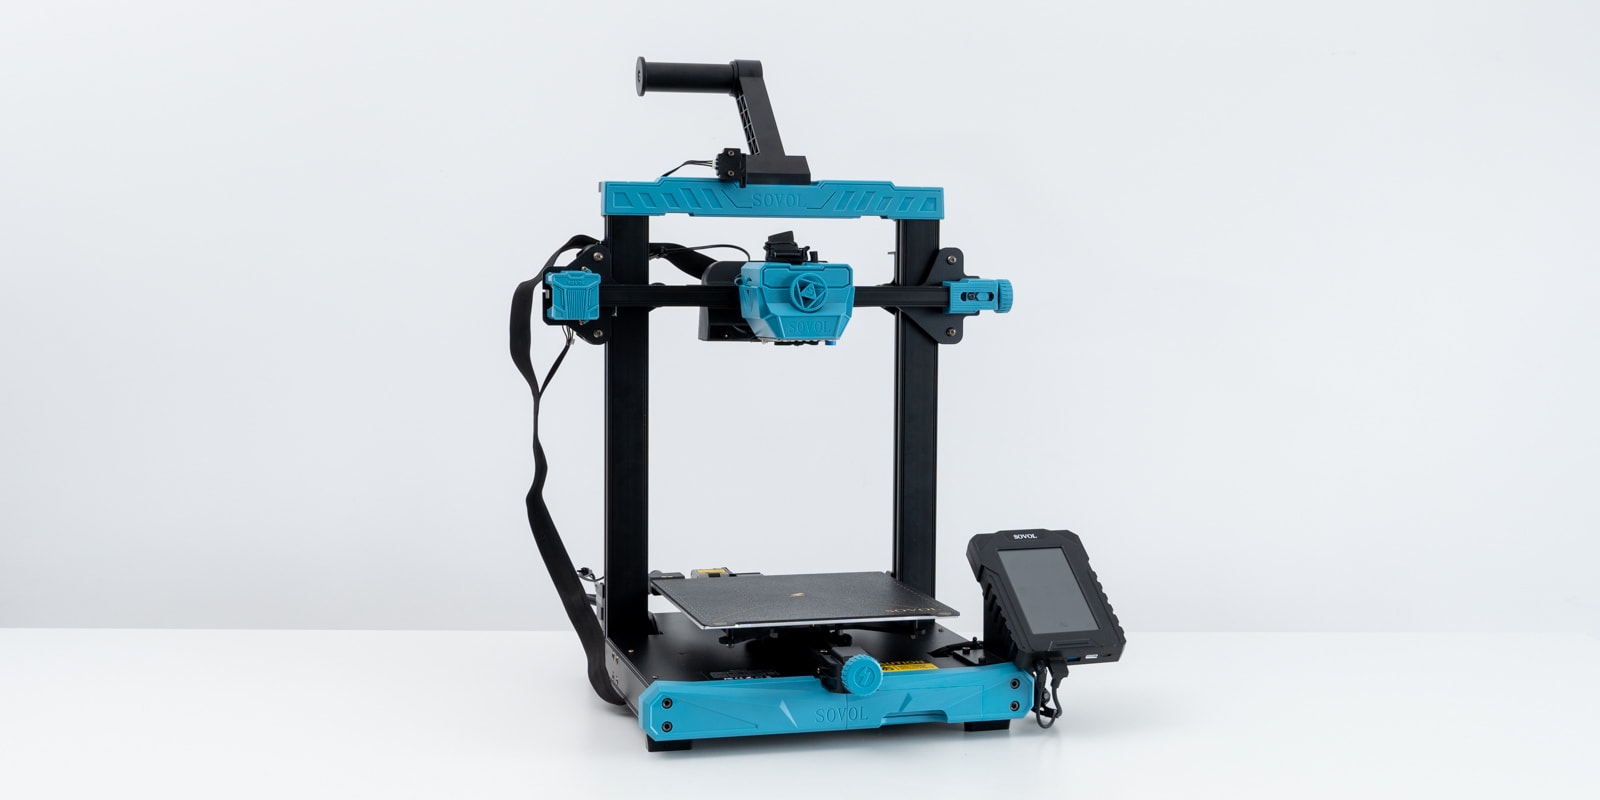 Sovol SV07 3D Printer Review